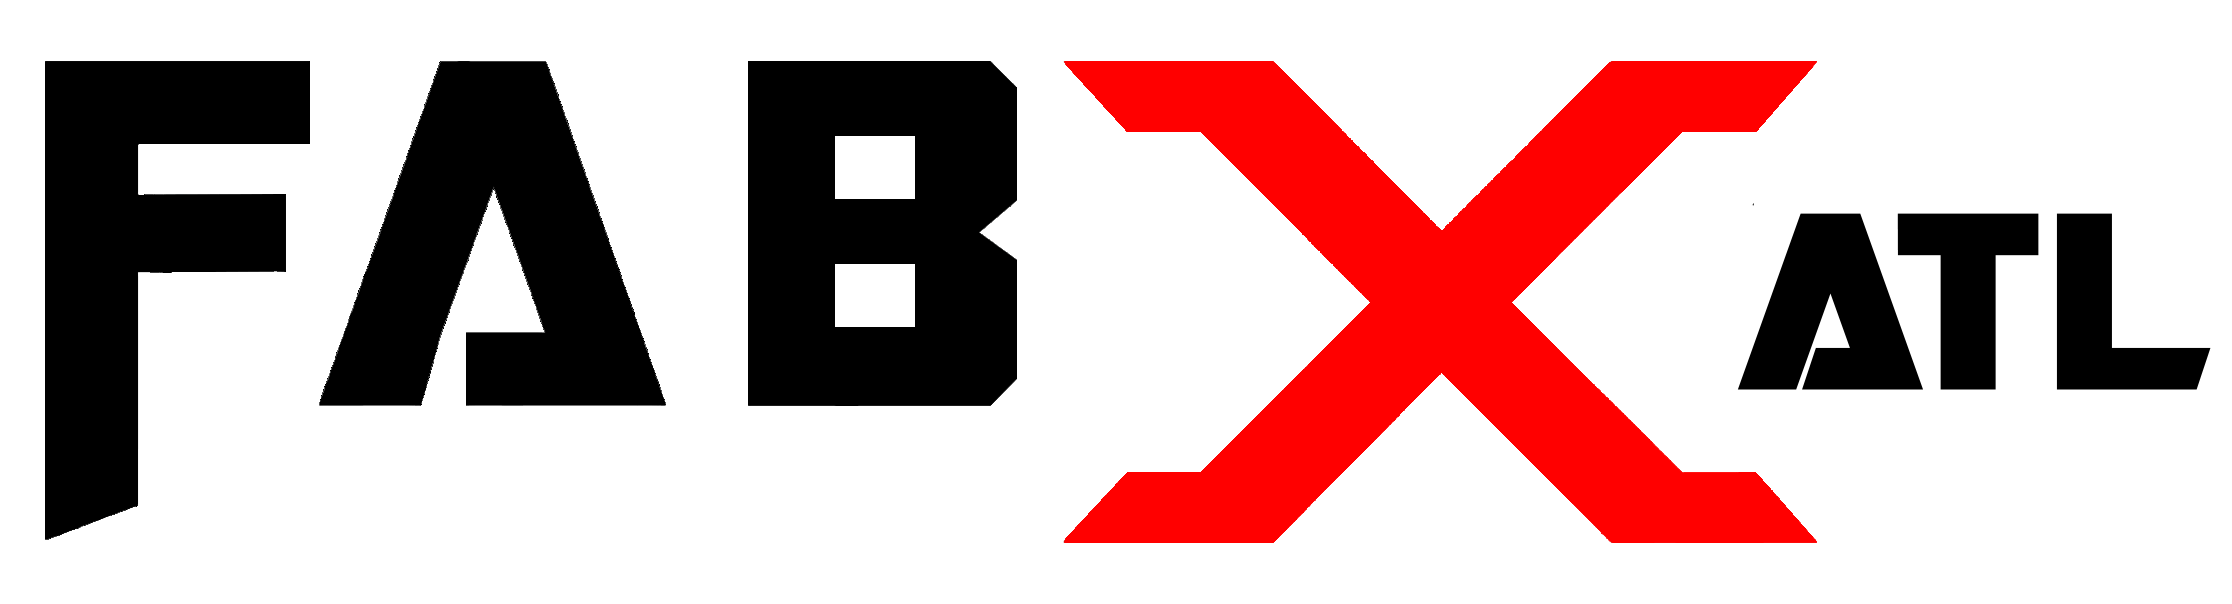 FabX XL logo India